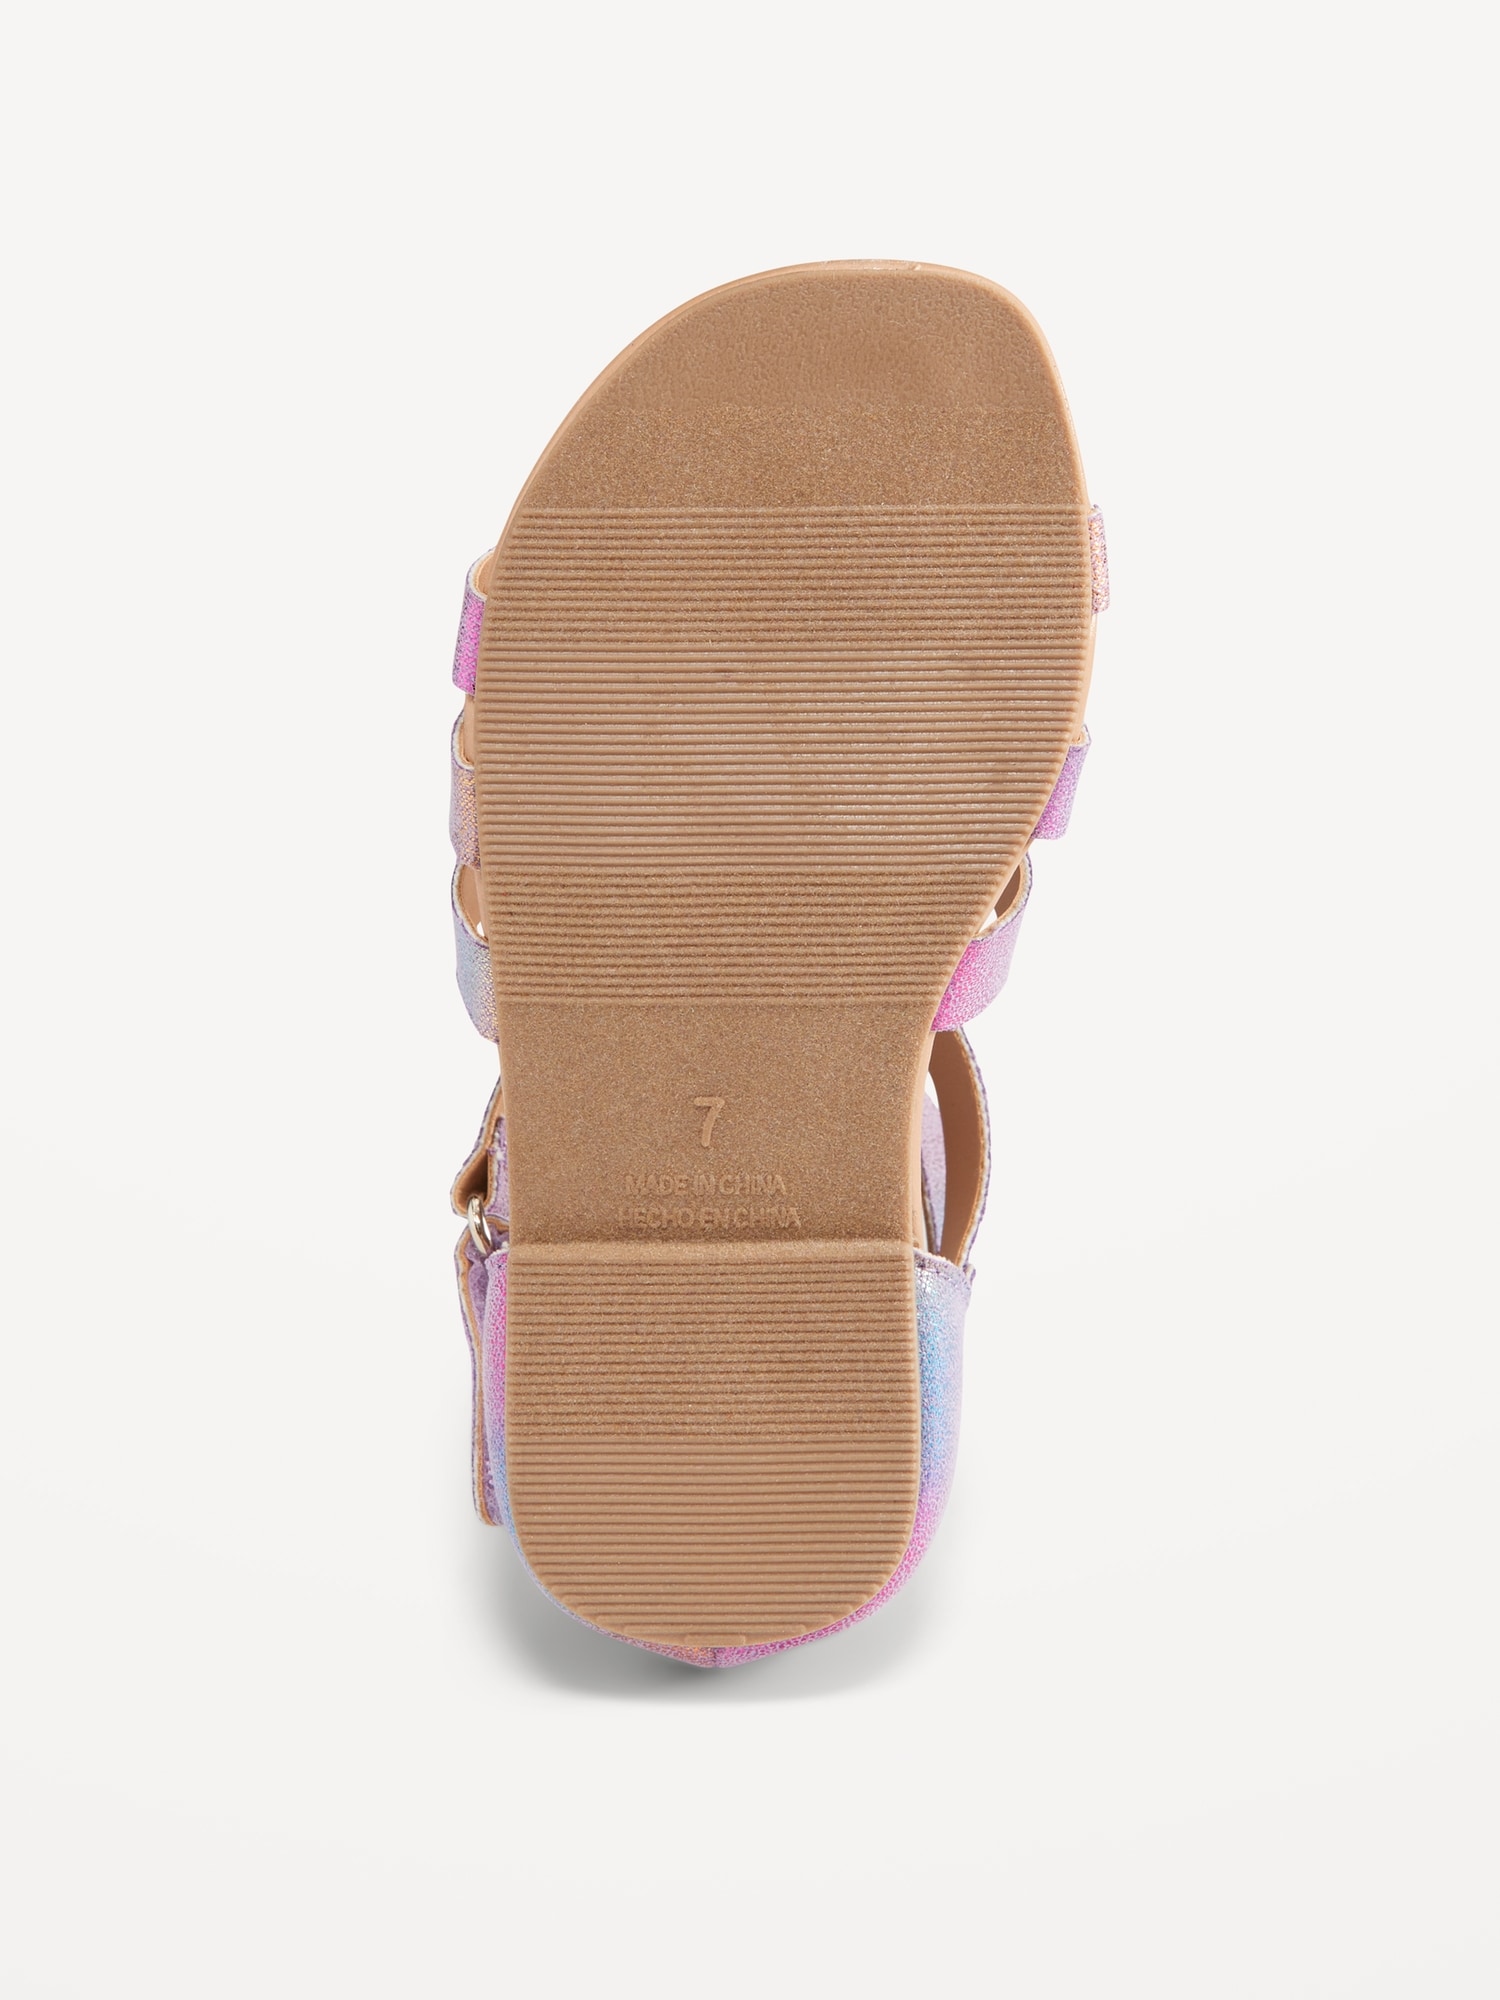 Gladiator Sandals for Toddler Girls